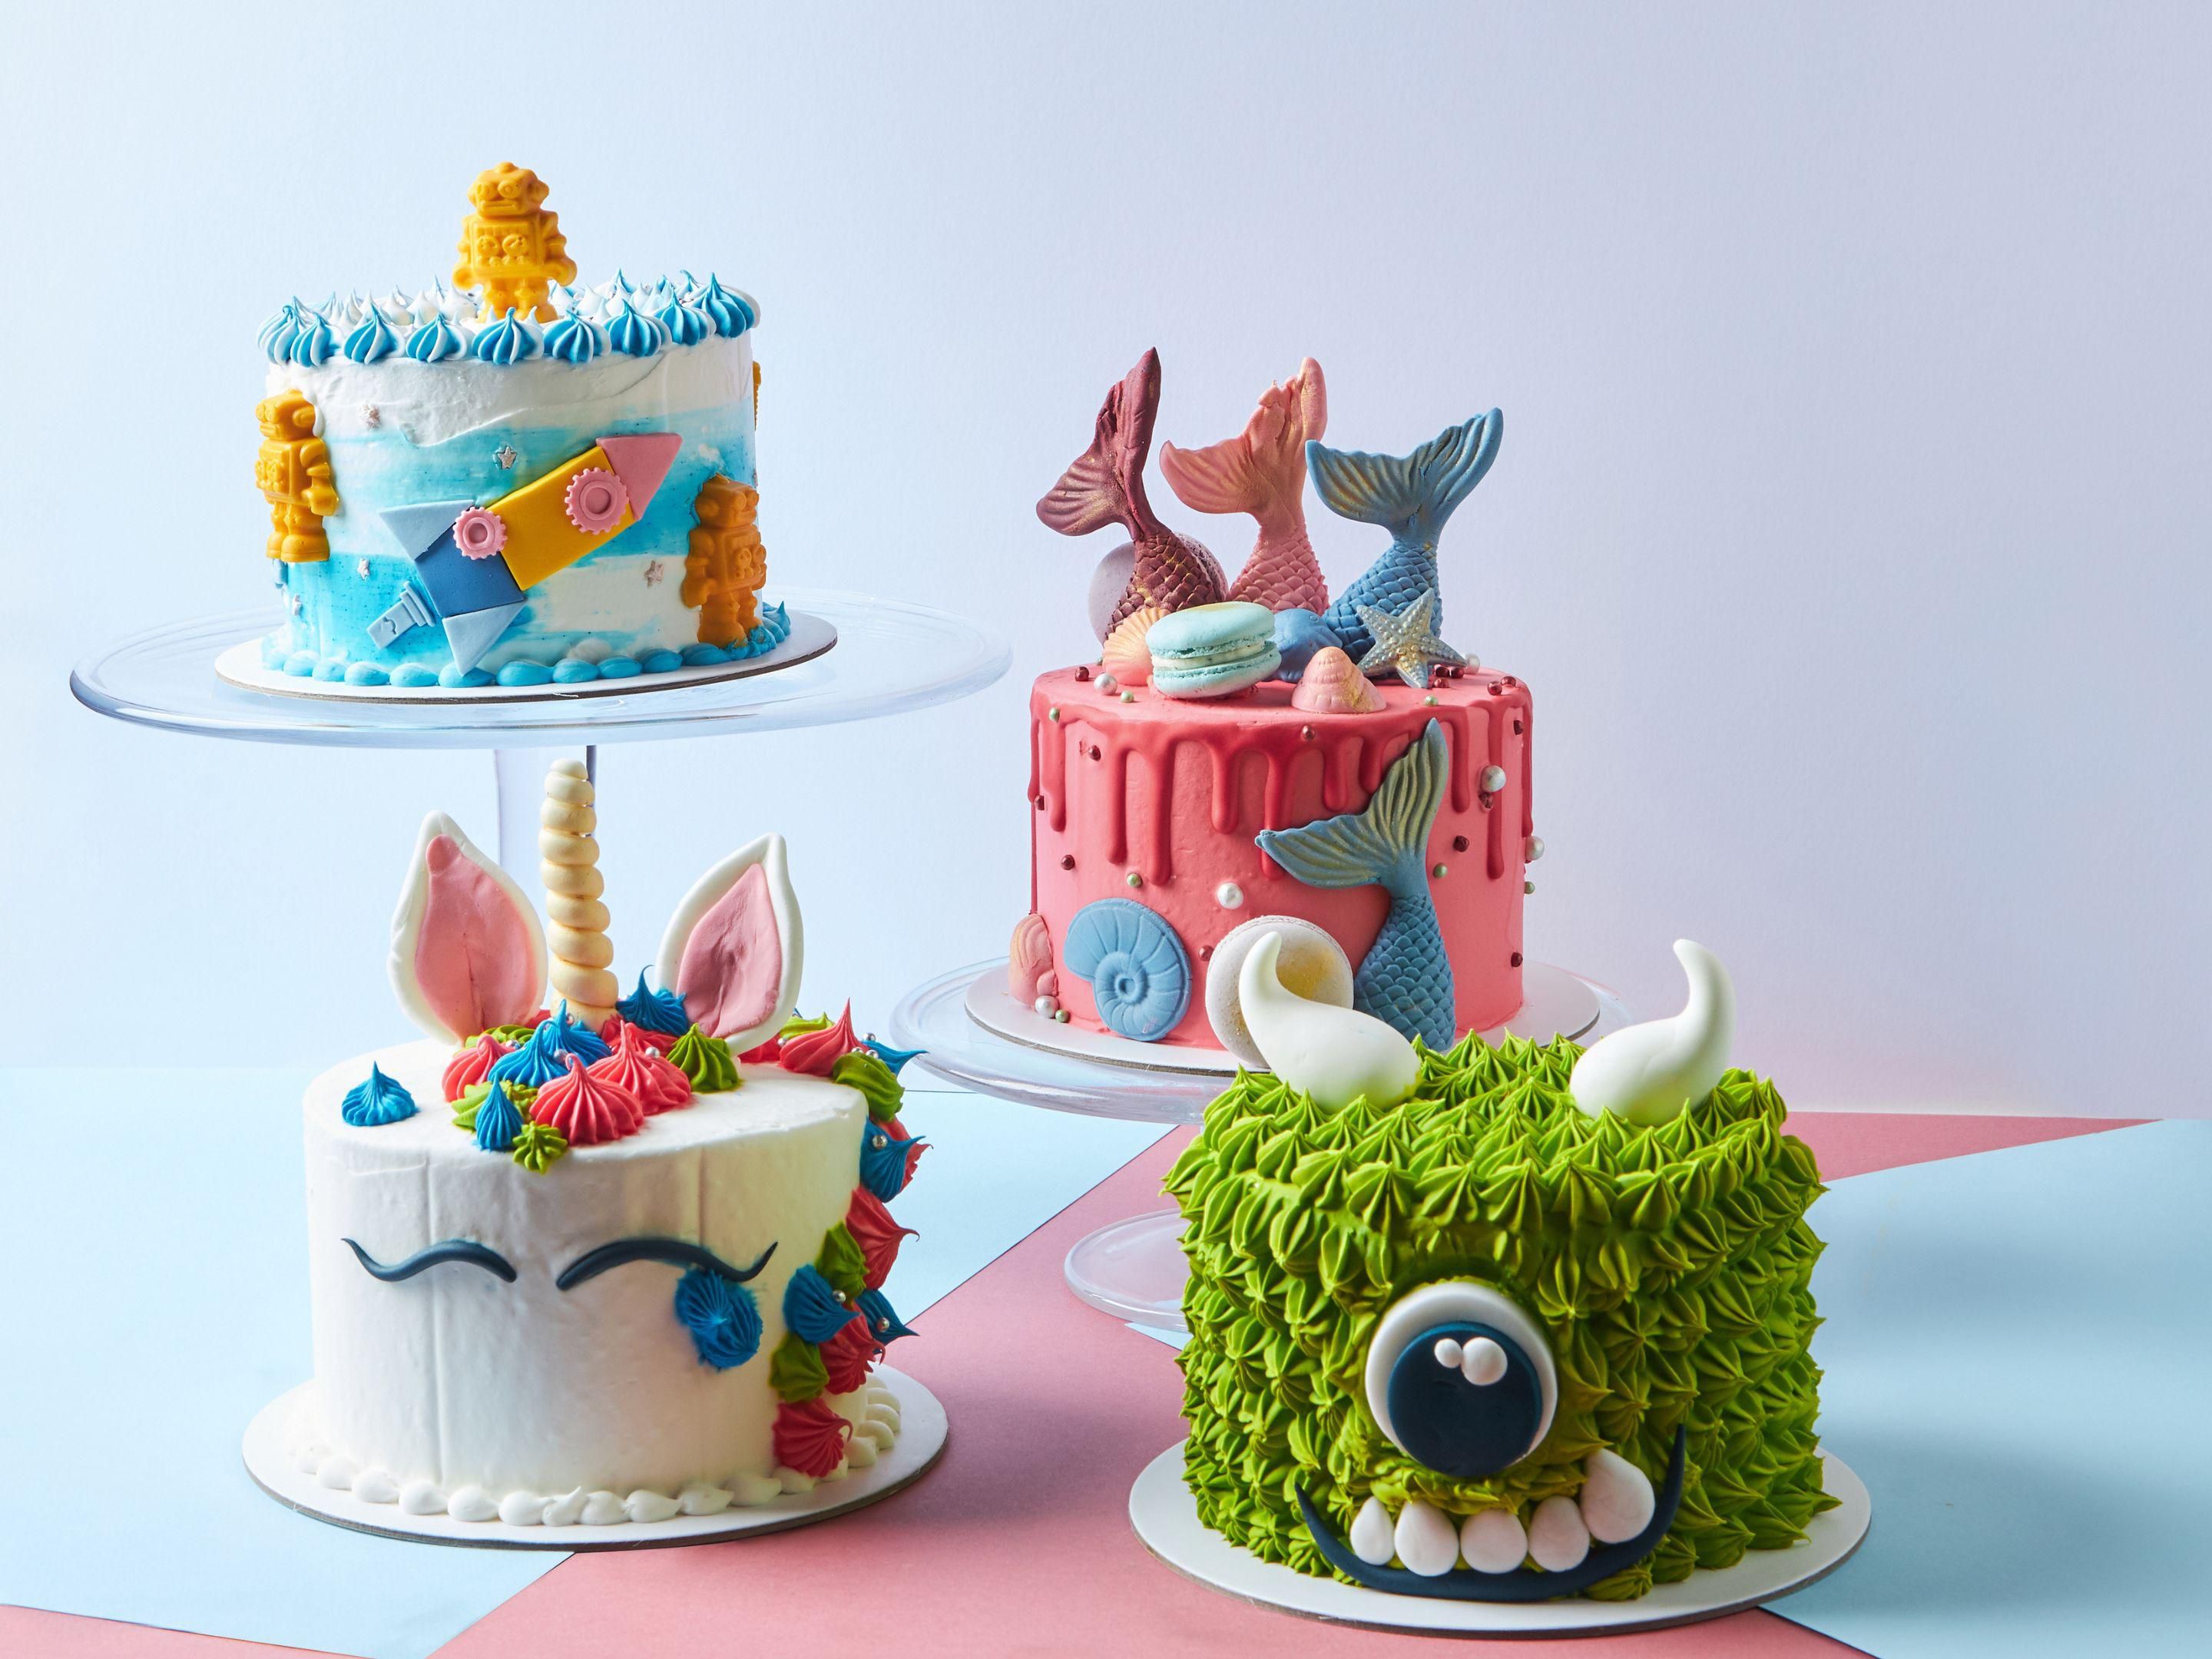 Whimsical custom cakes